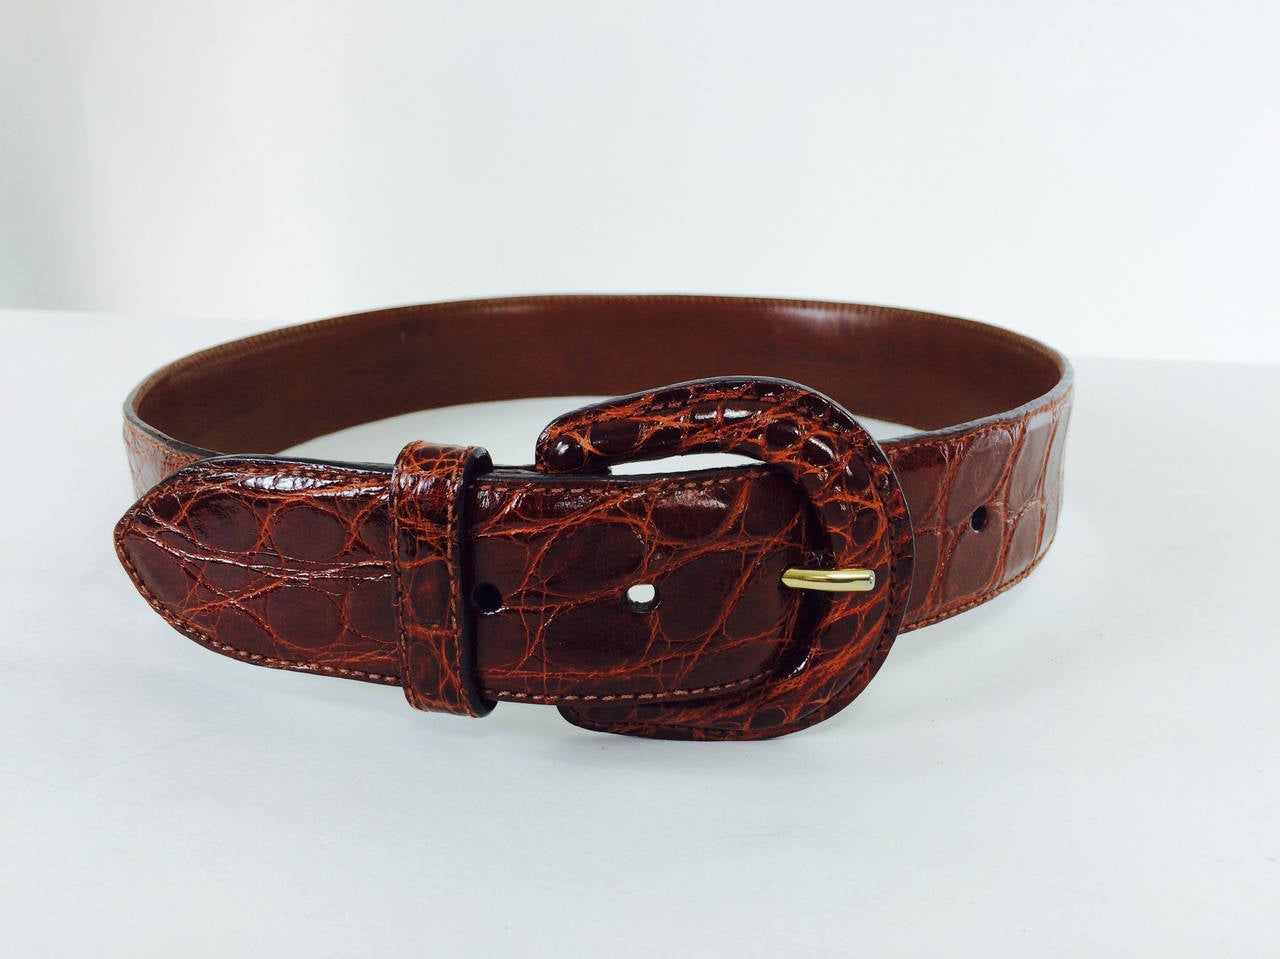 Polo Ralph Lauren wide glazed cognac alligator belt marked size 28, in excellent condition...33 3/4